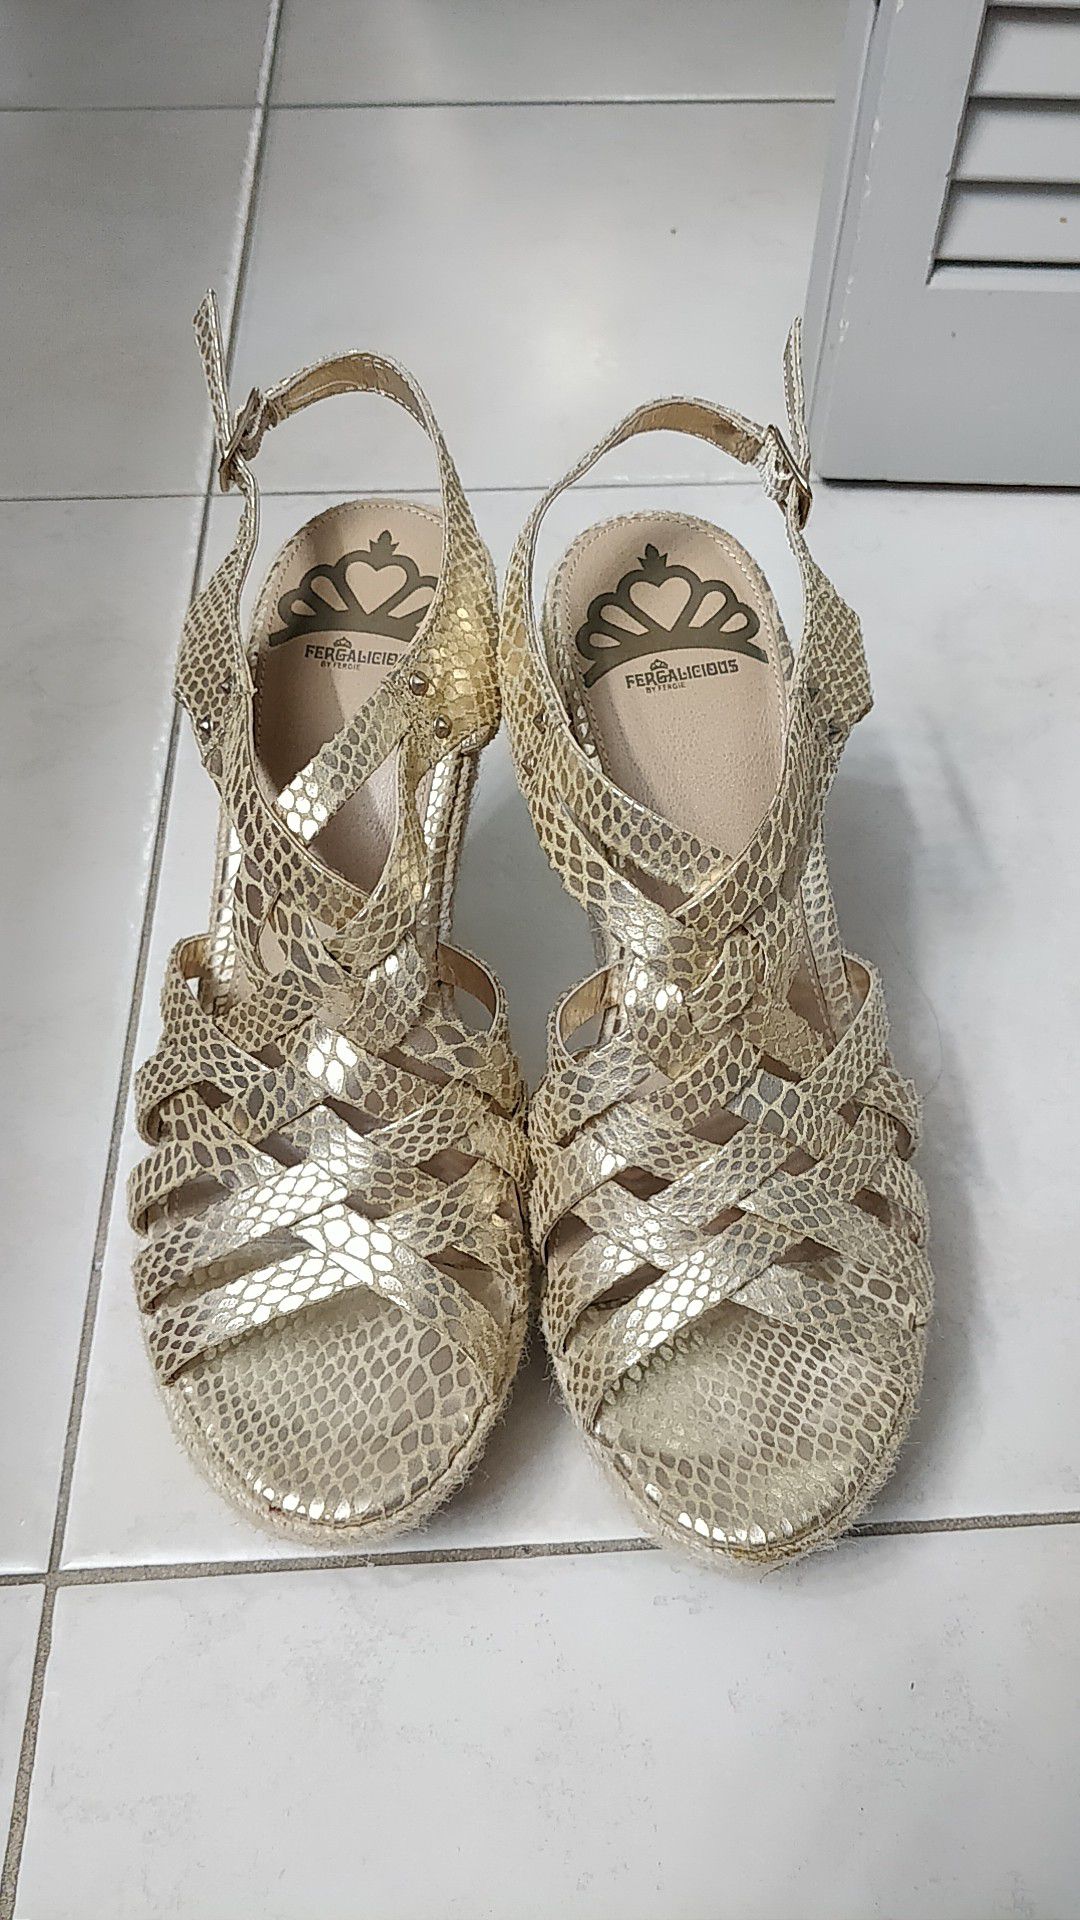 Gold sandals by Fergalicious